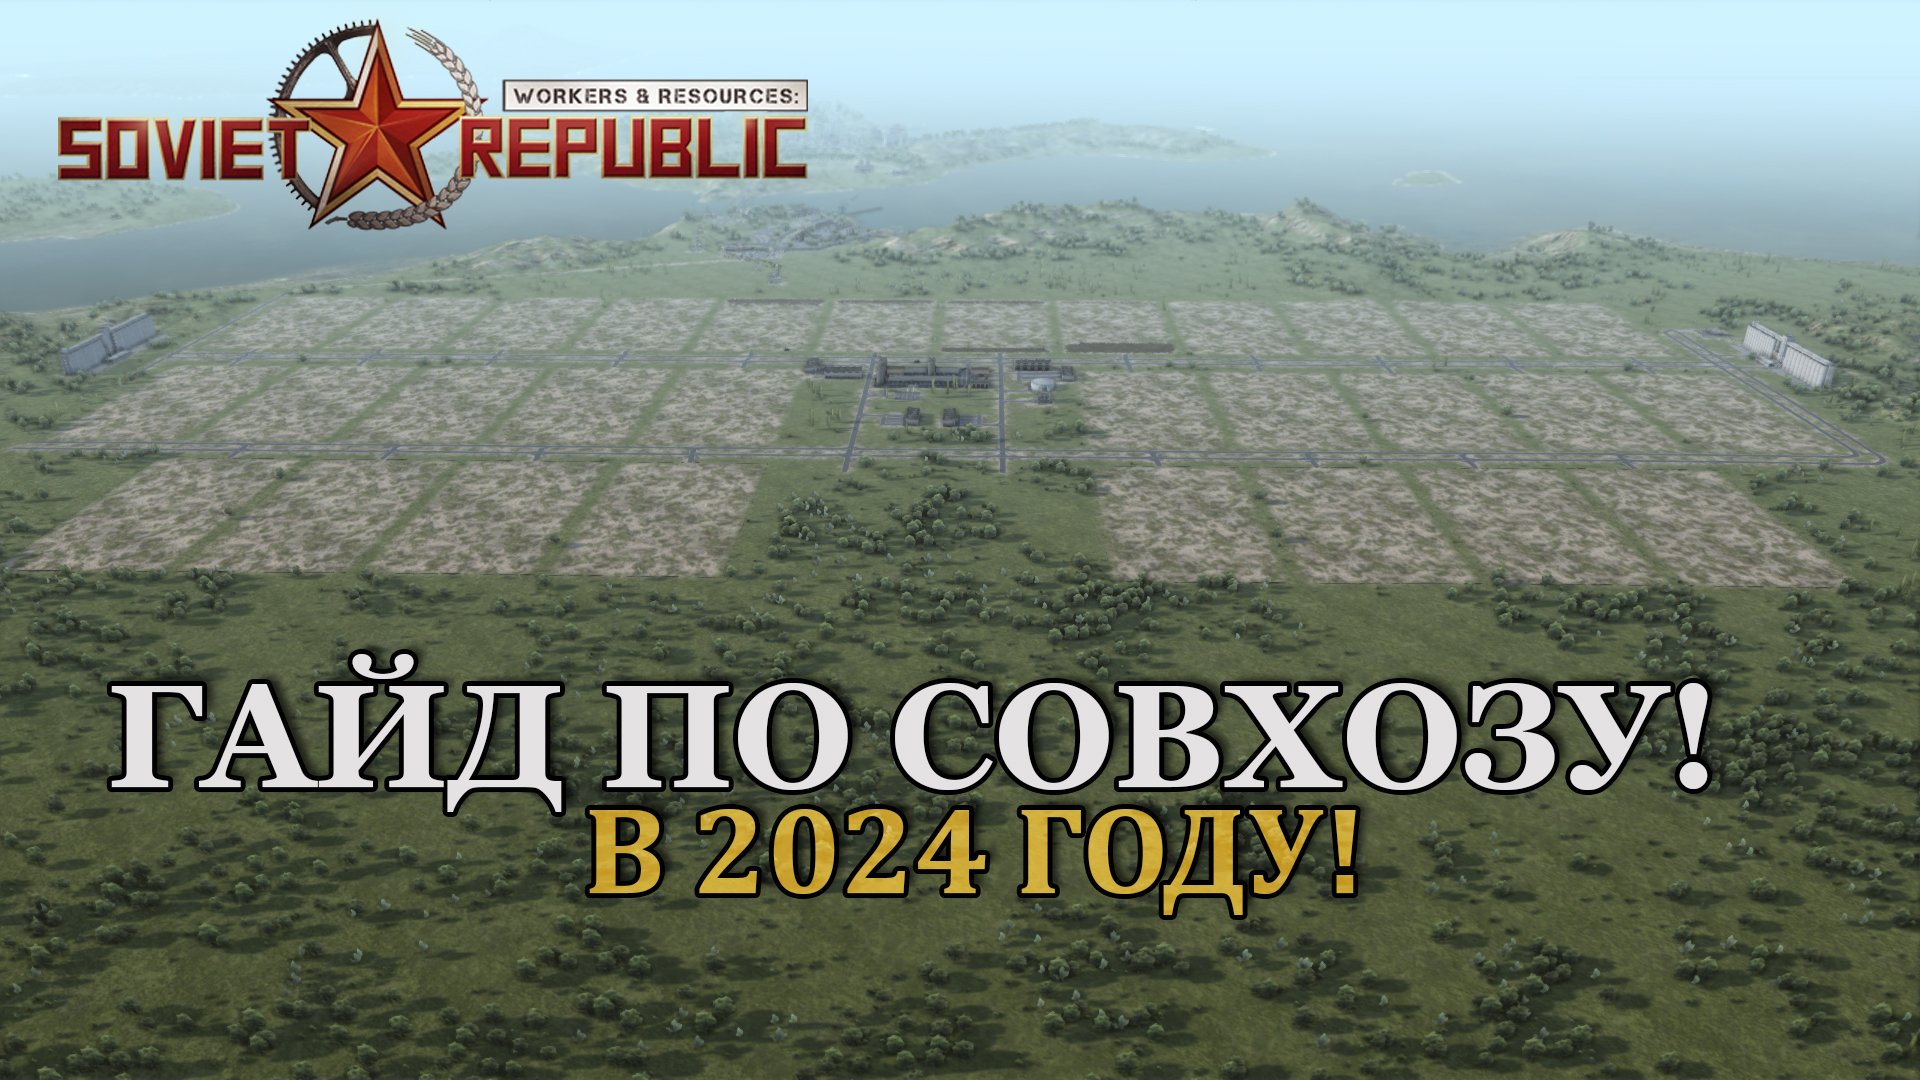 Workers & Resources: Soviet Republic ГАЙД ПО СОВХОЗУ! В 2024 ГОДУ!